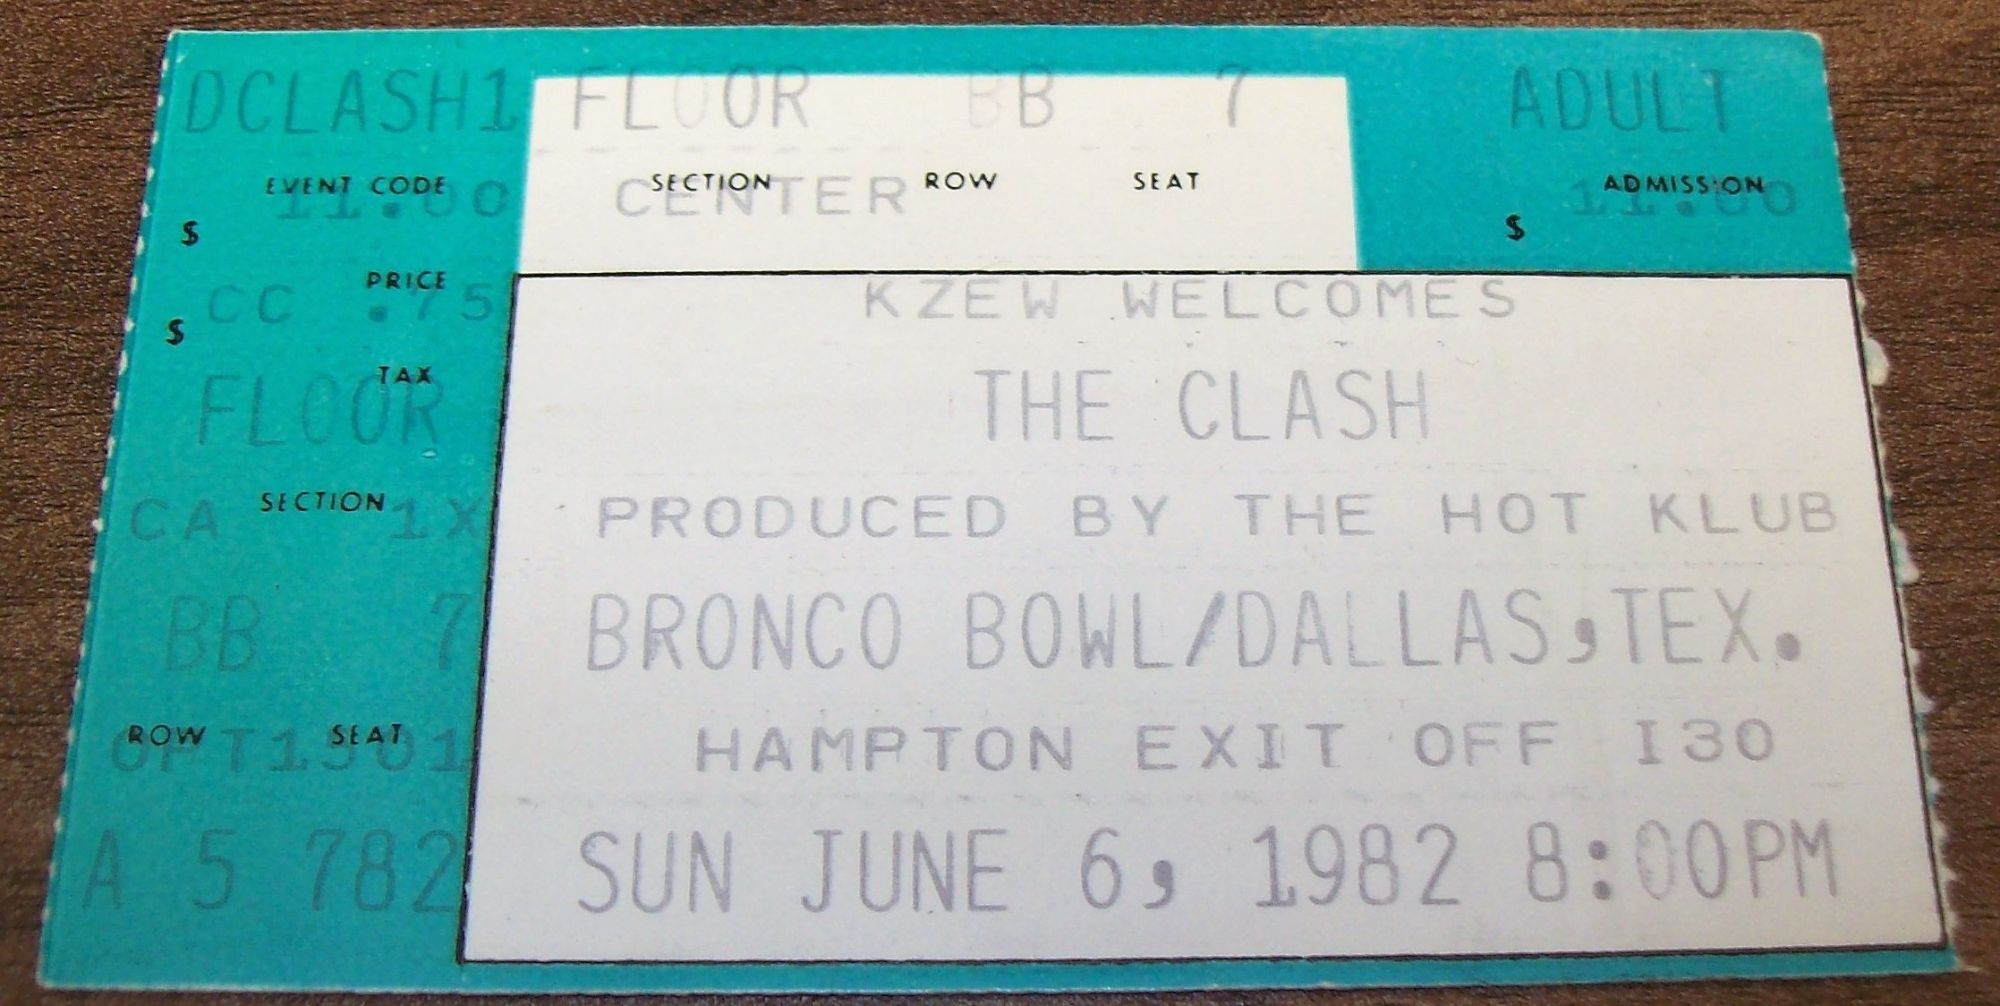 THE CLASH CONCERT TICKET SUNDAY 6th JUNE 1982 BRONCO BOWL DALLAS TEXAS